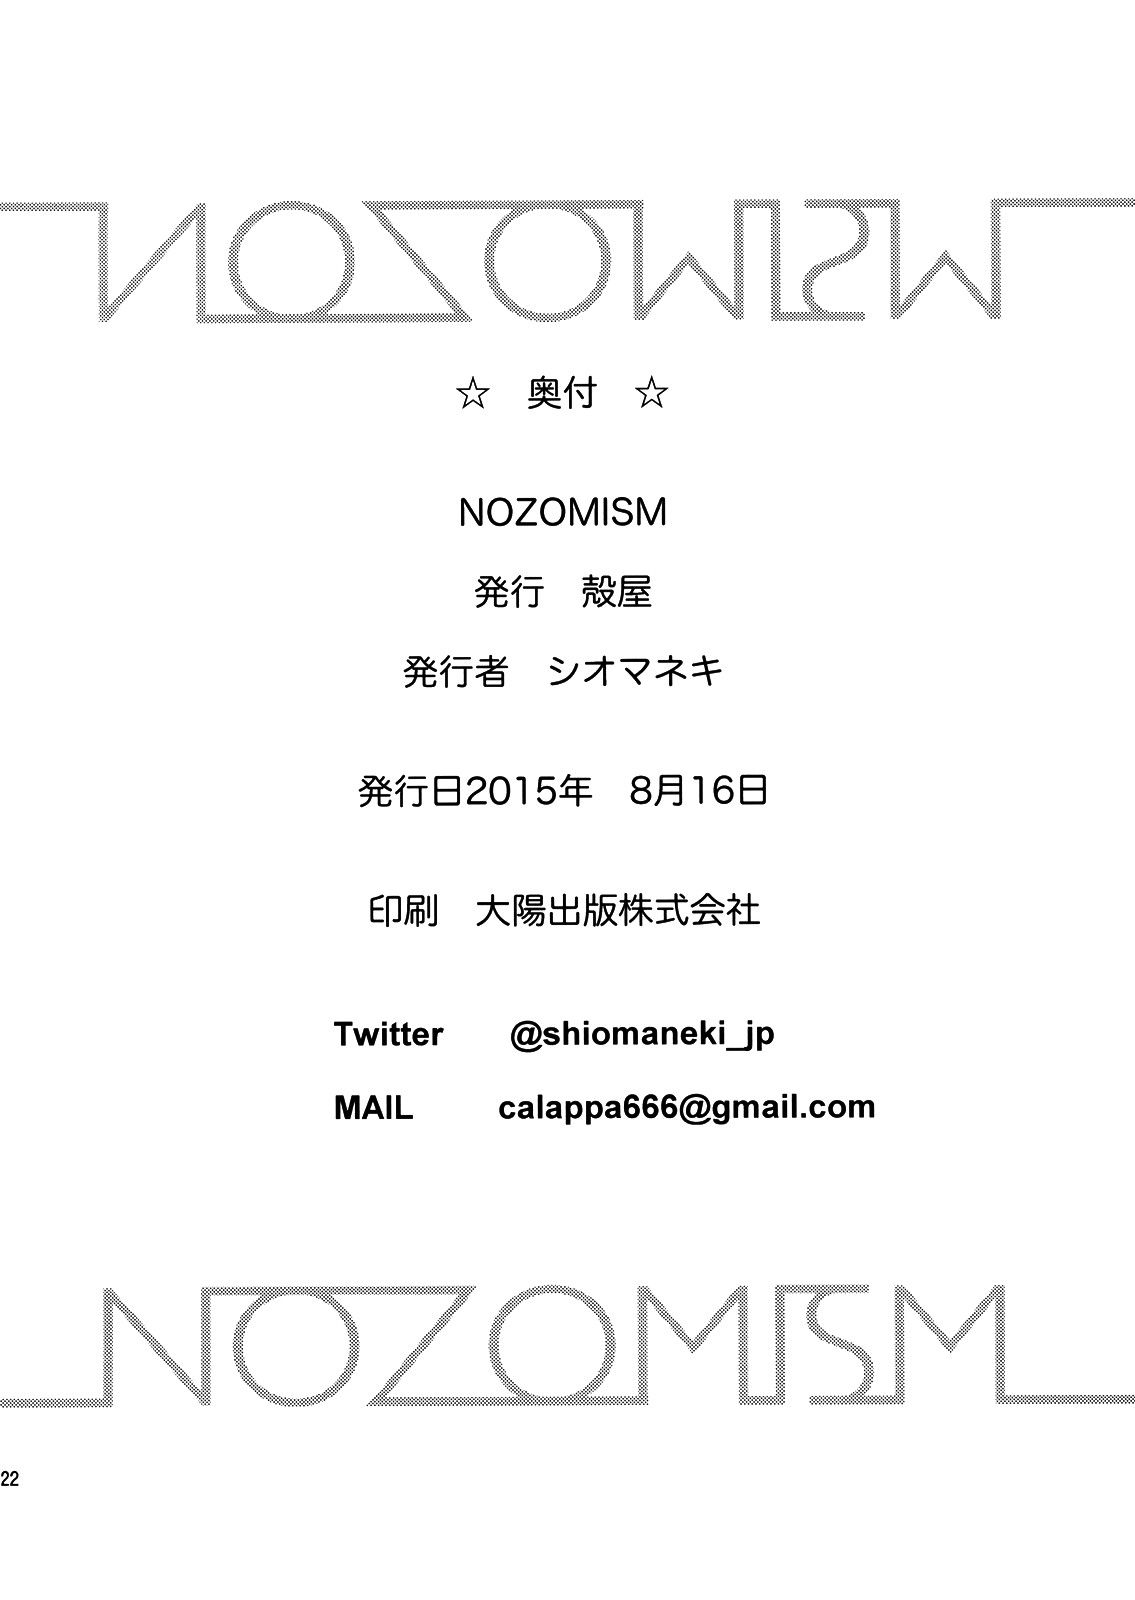 NOZOMISM - 21